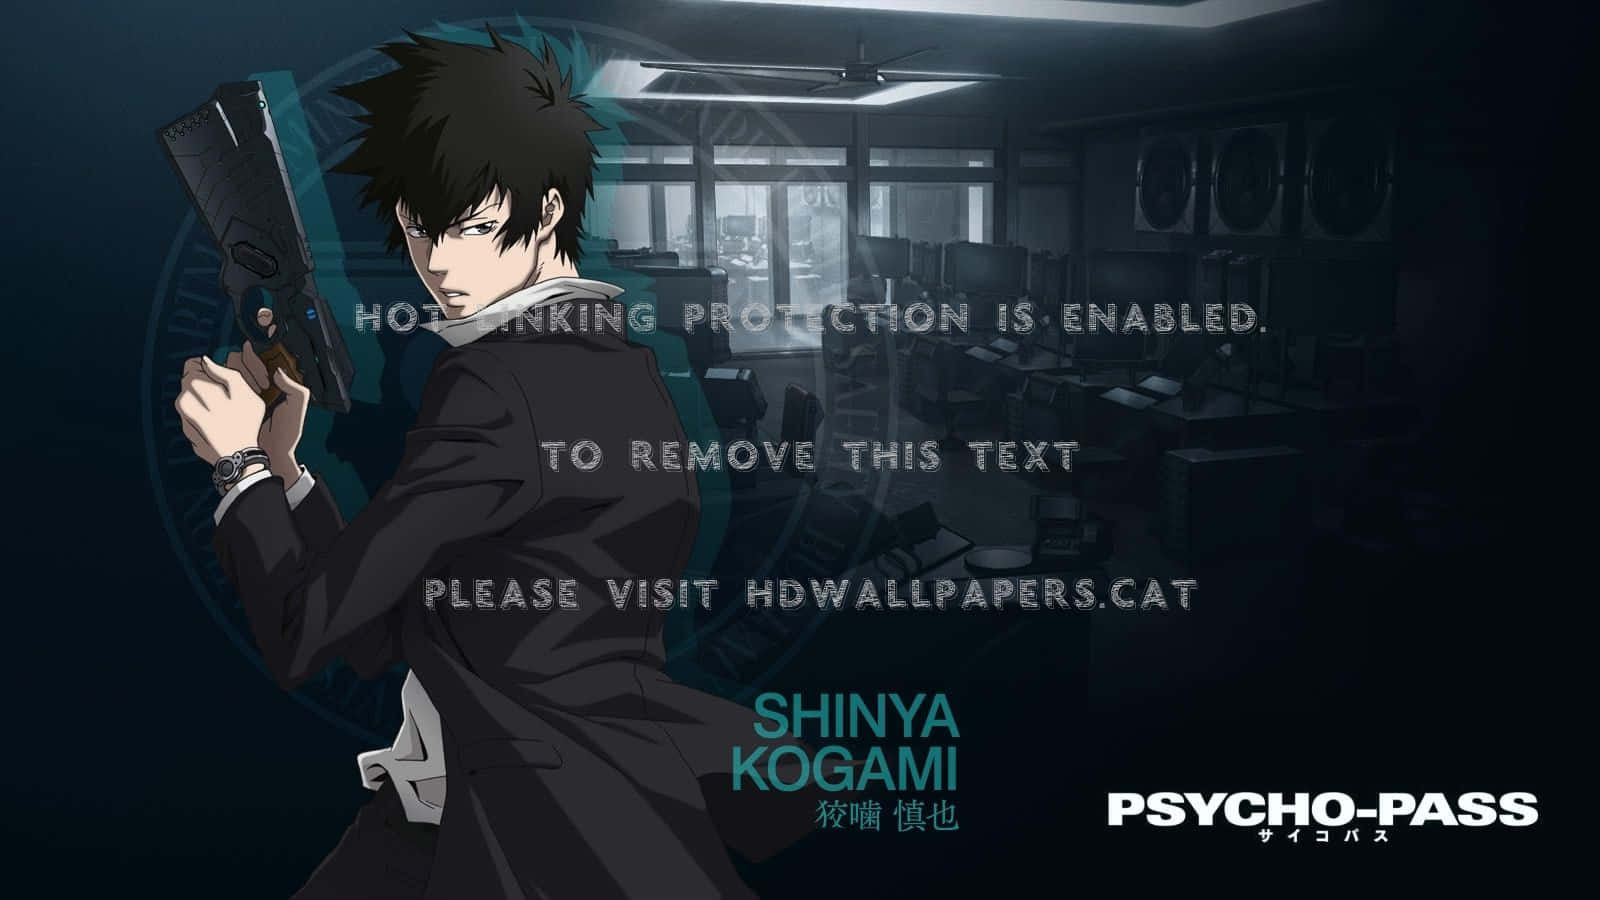 Shinya Kogami - A skilled enforcer in Psycho-Pass Wallpaper